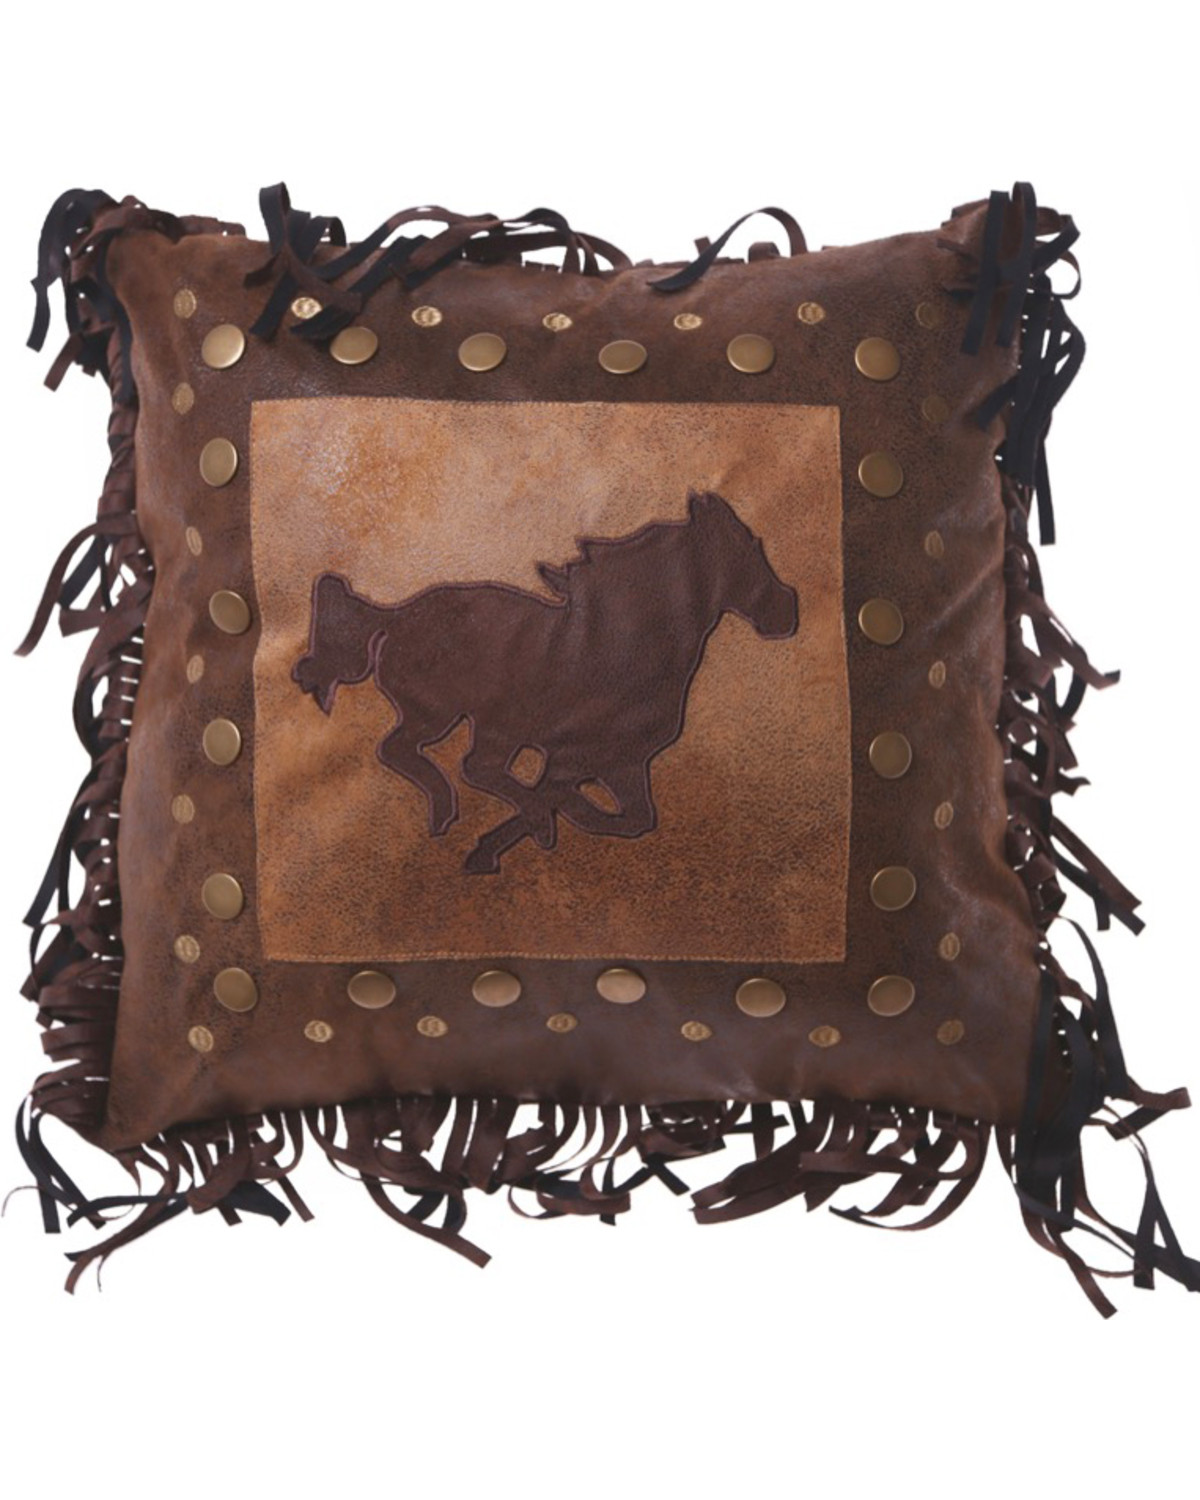 Carstens Brown Horse Rivet Pillow